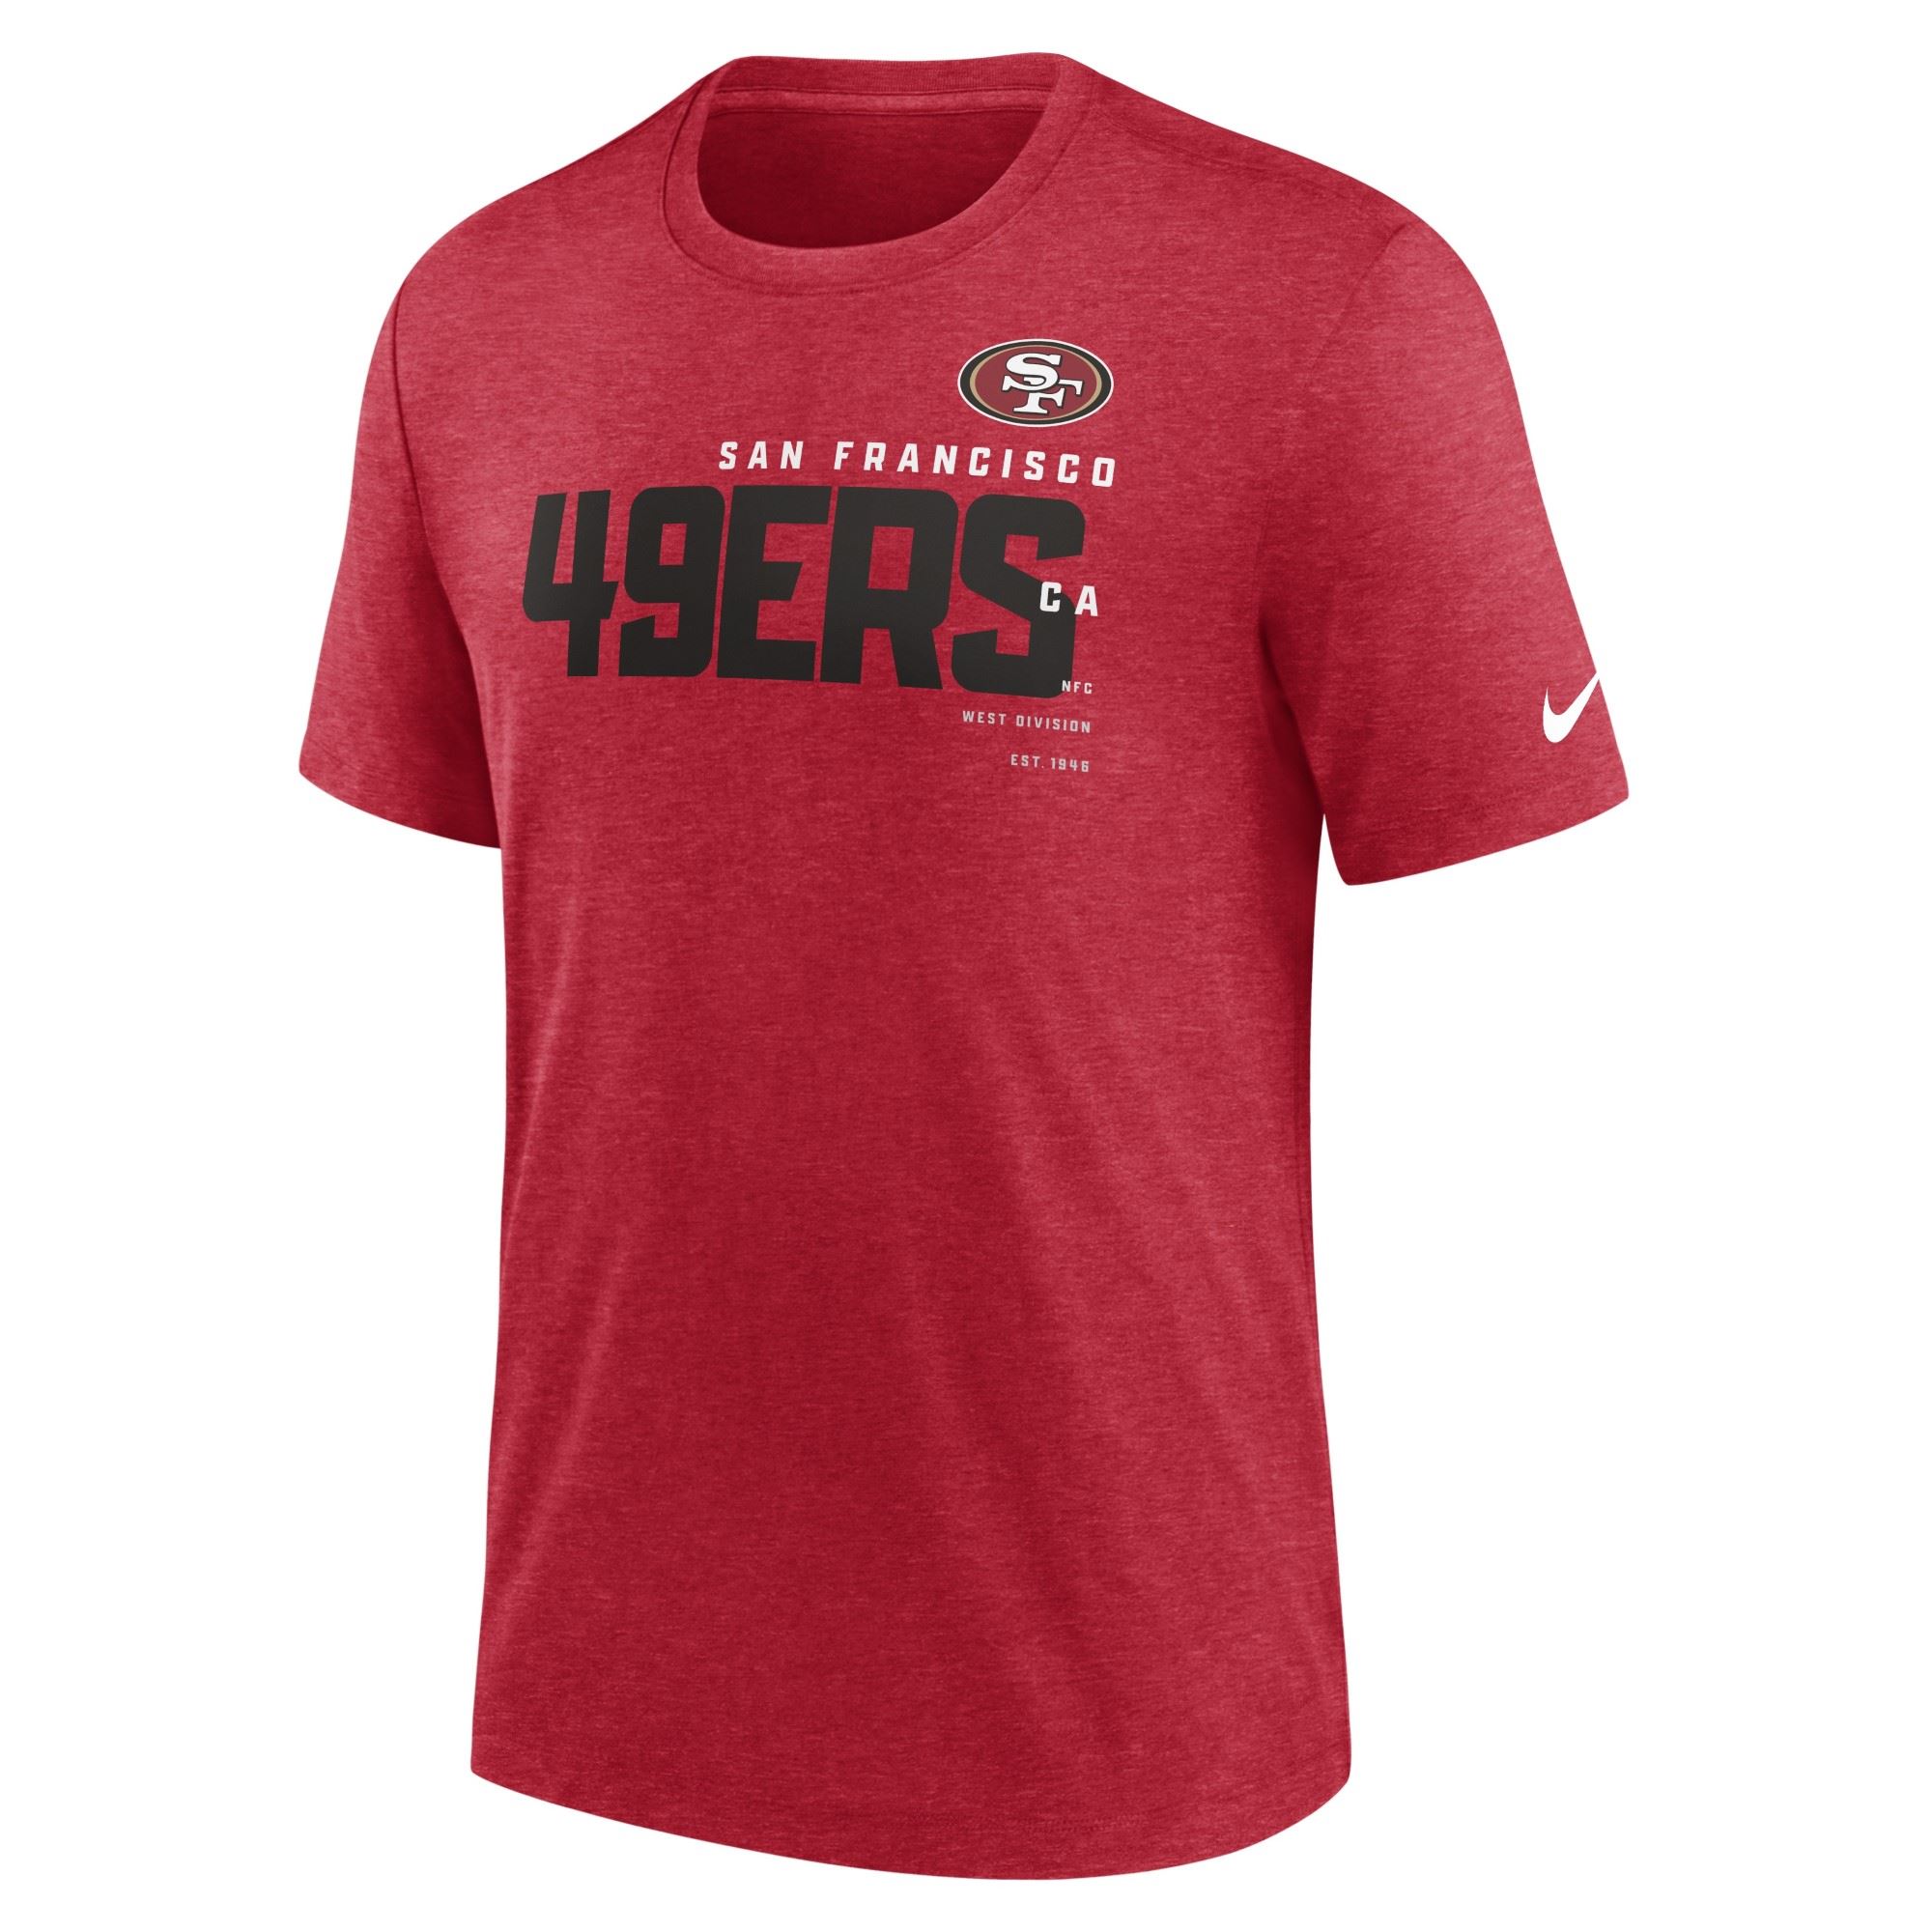 San Francisco 49ers NFL Triblend Team Name Fashion Red Heather T-Shirt Nike